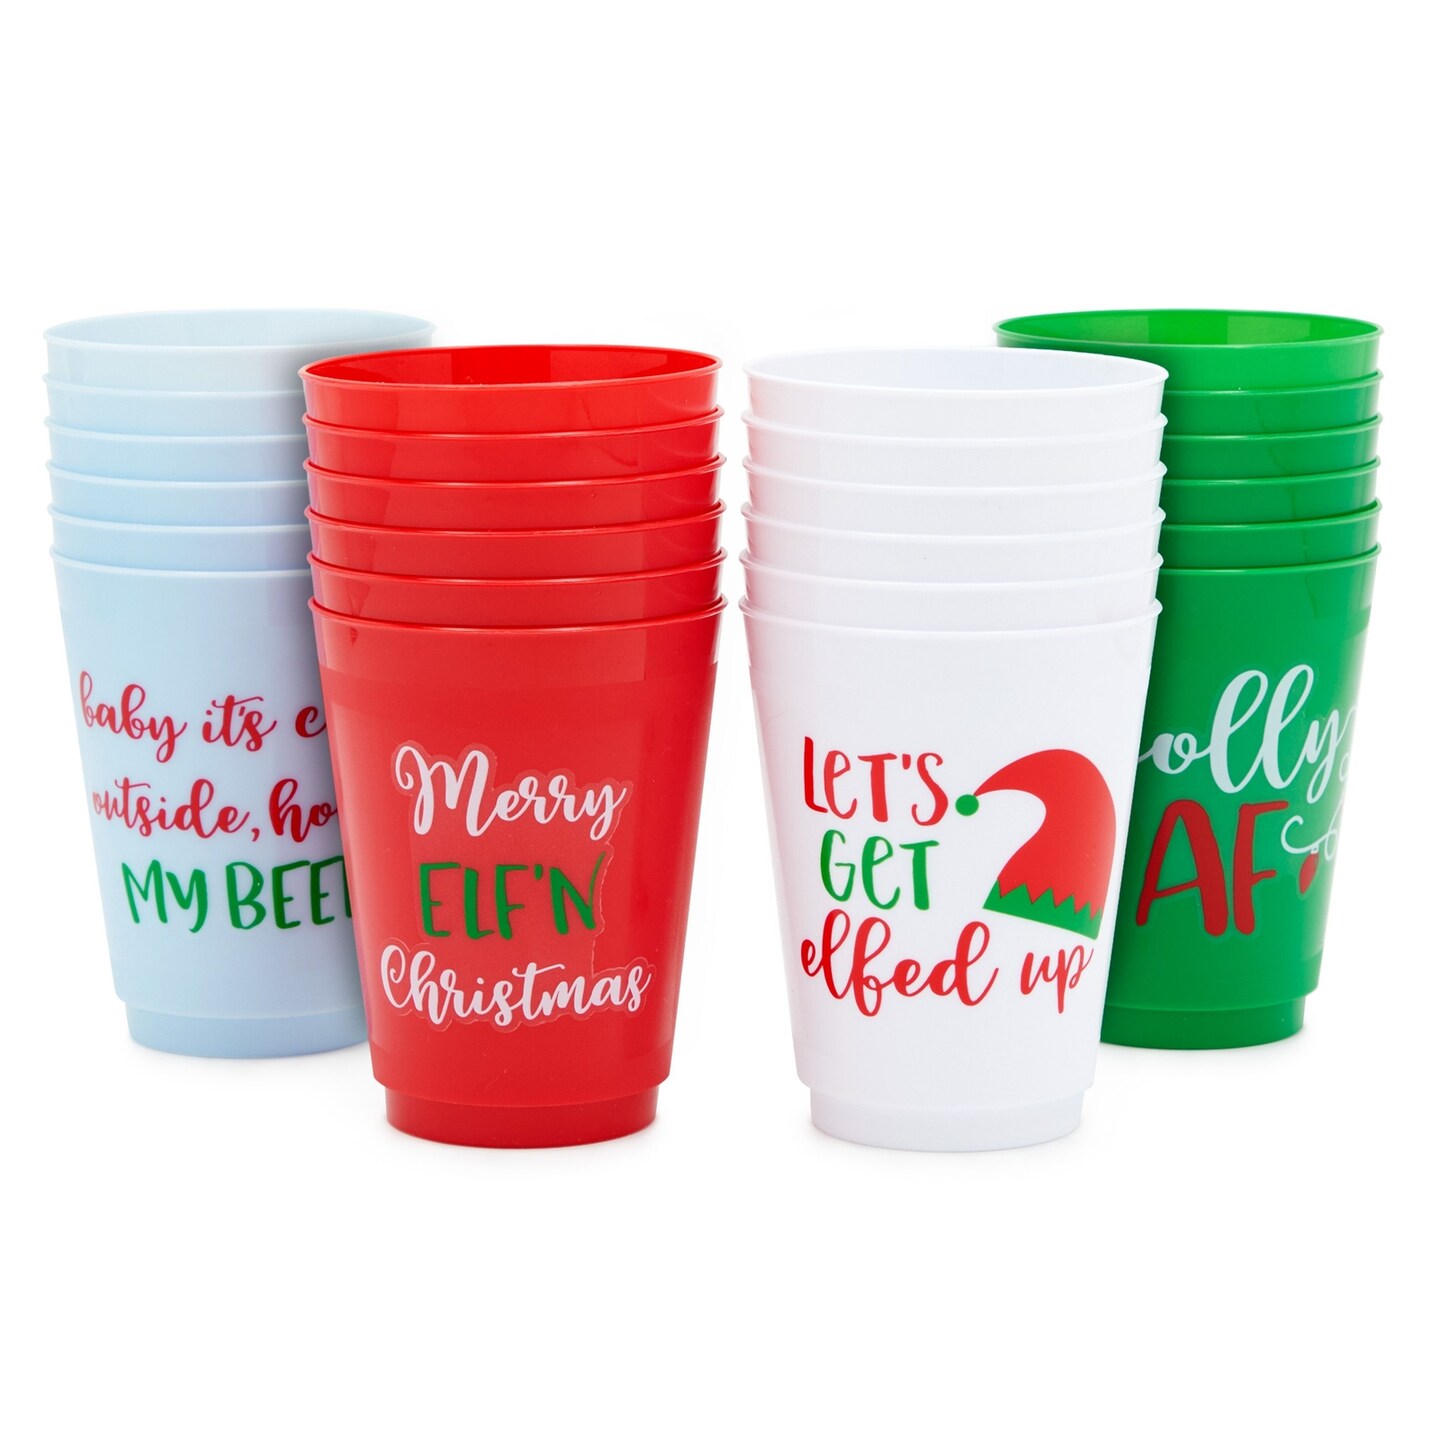 Christmas Y'all 16 oz. Plastic Cups